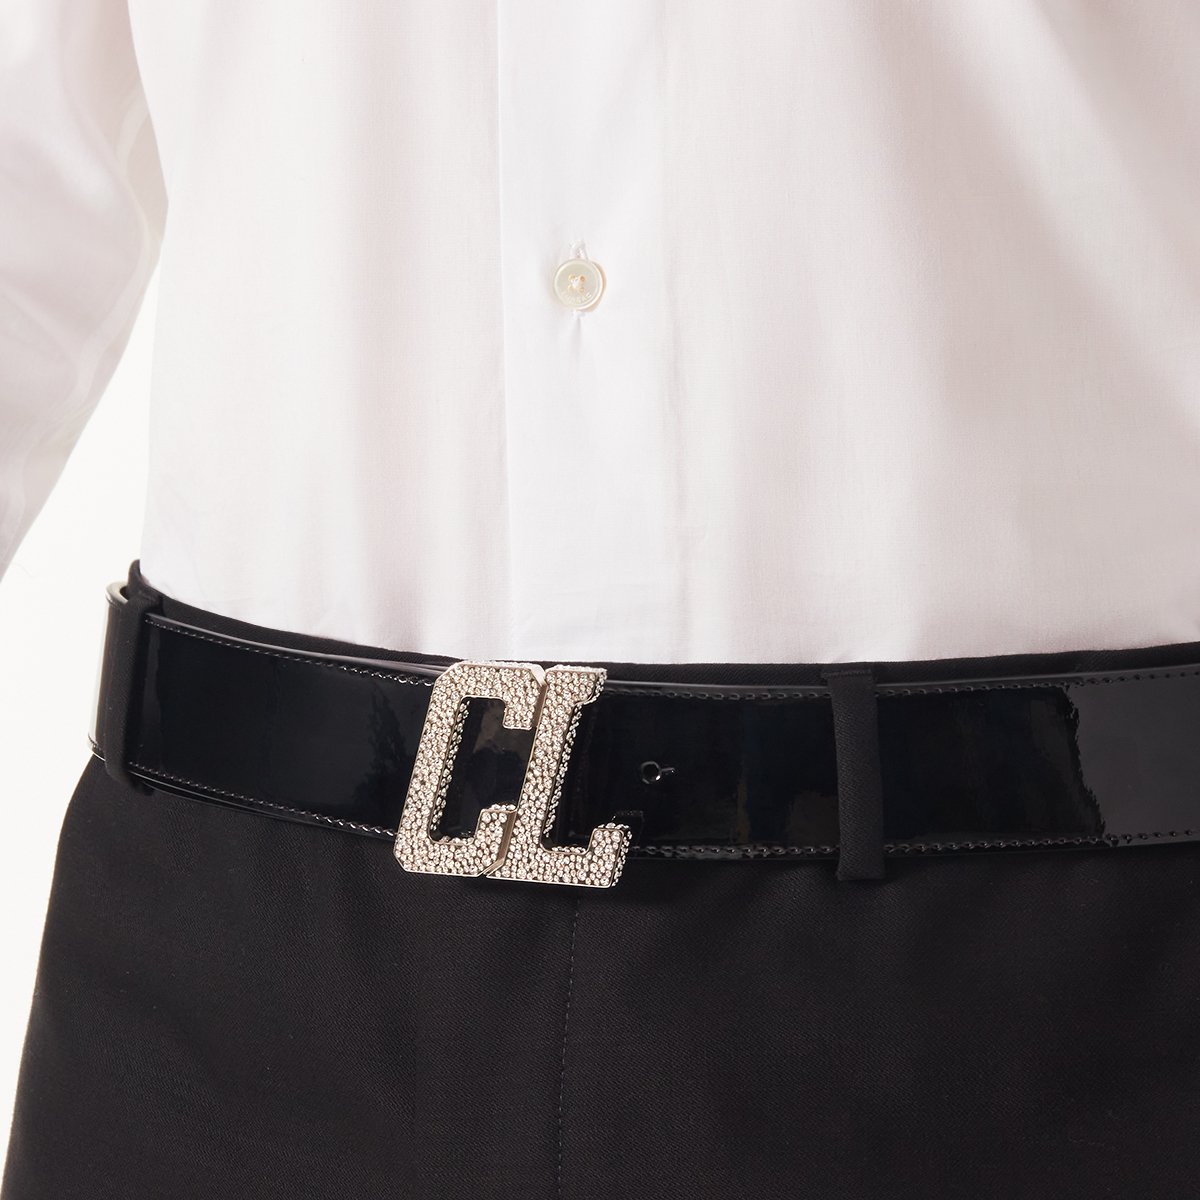 Happy Rui CL Logo belt buckle